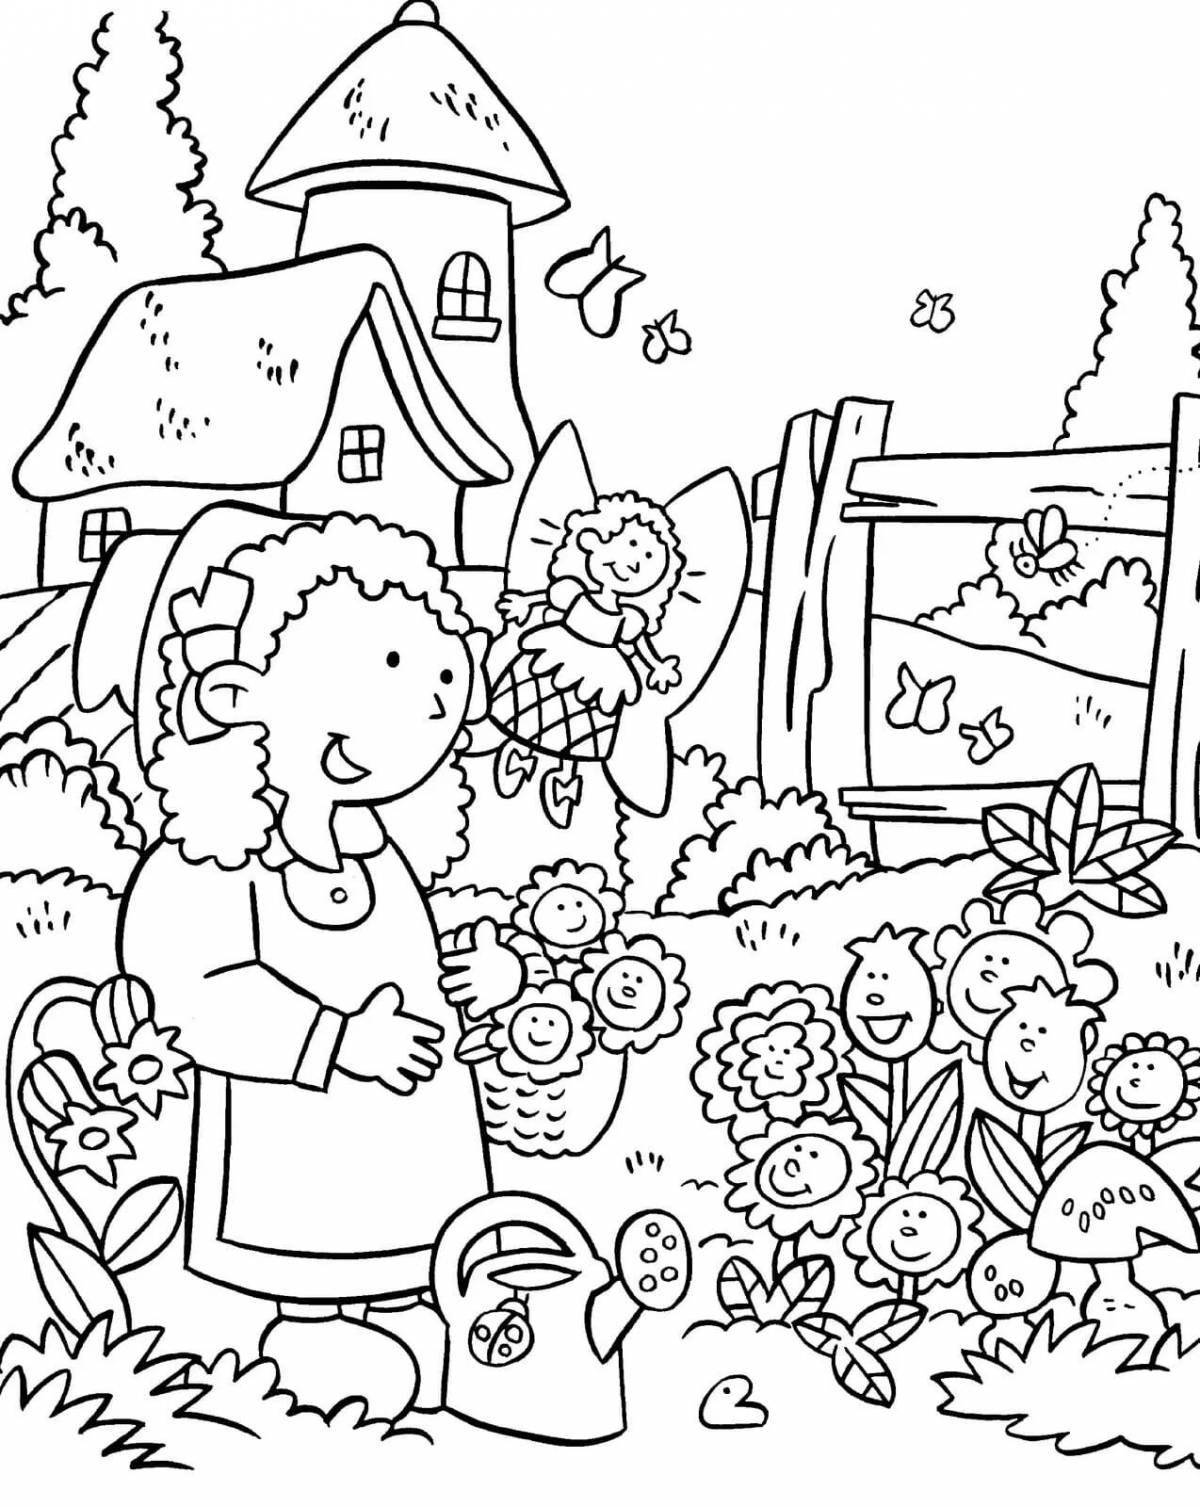 Coloring book joyful garden for children